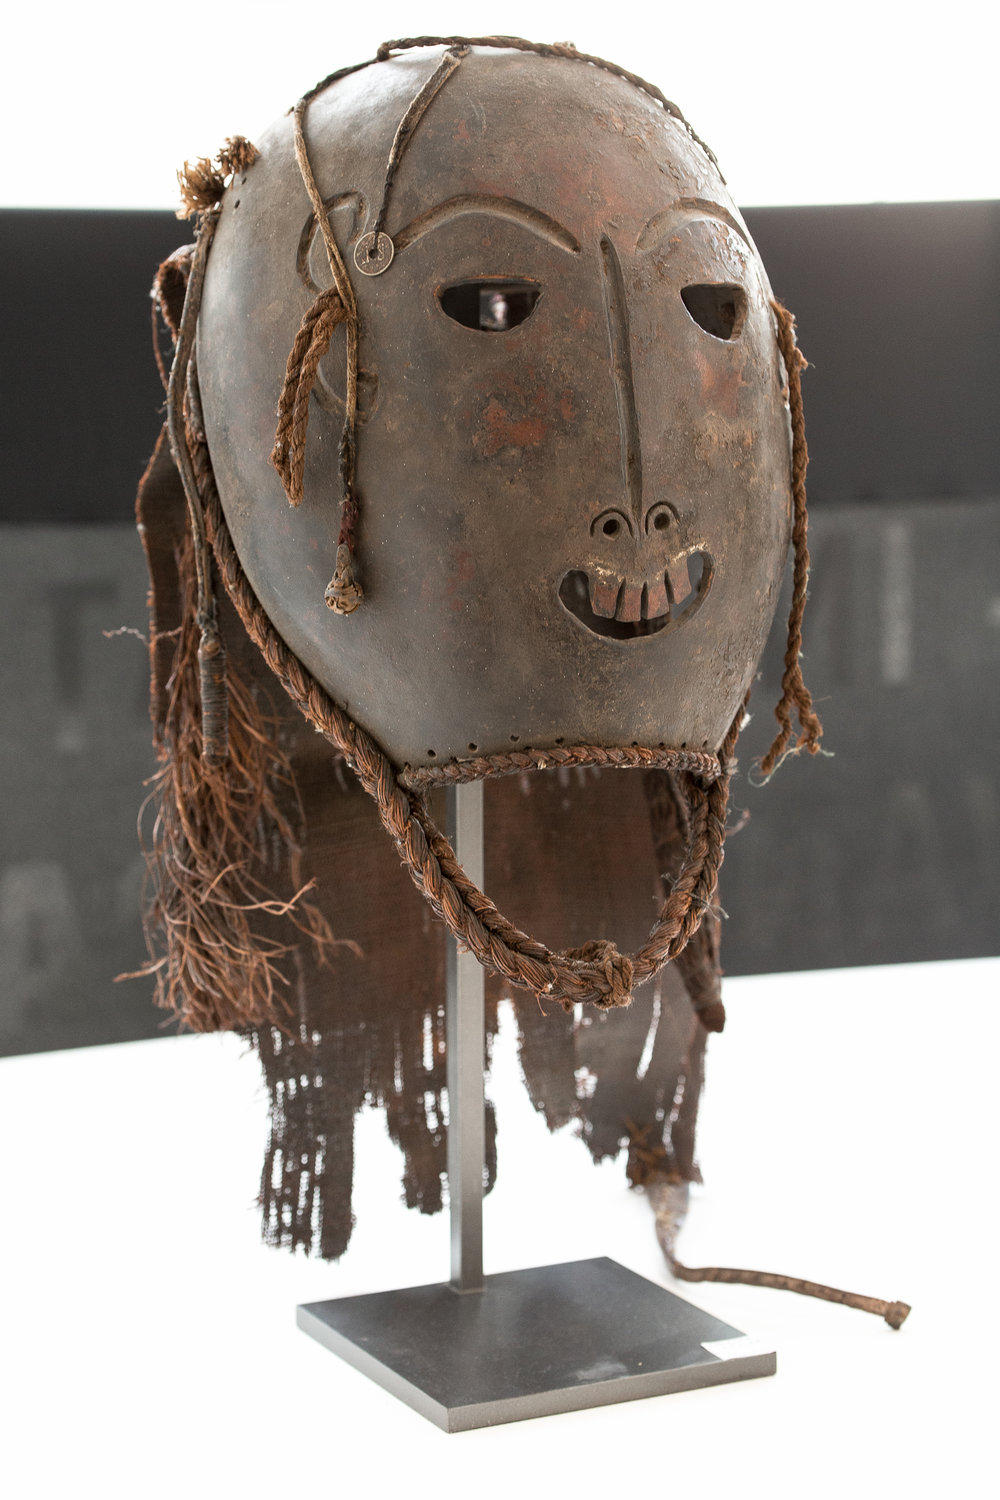 tribal-art-oostende-ostende-exposition-galerie-lz-art-africain-belgique-4.jpg